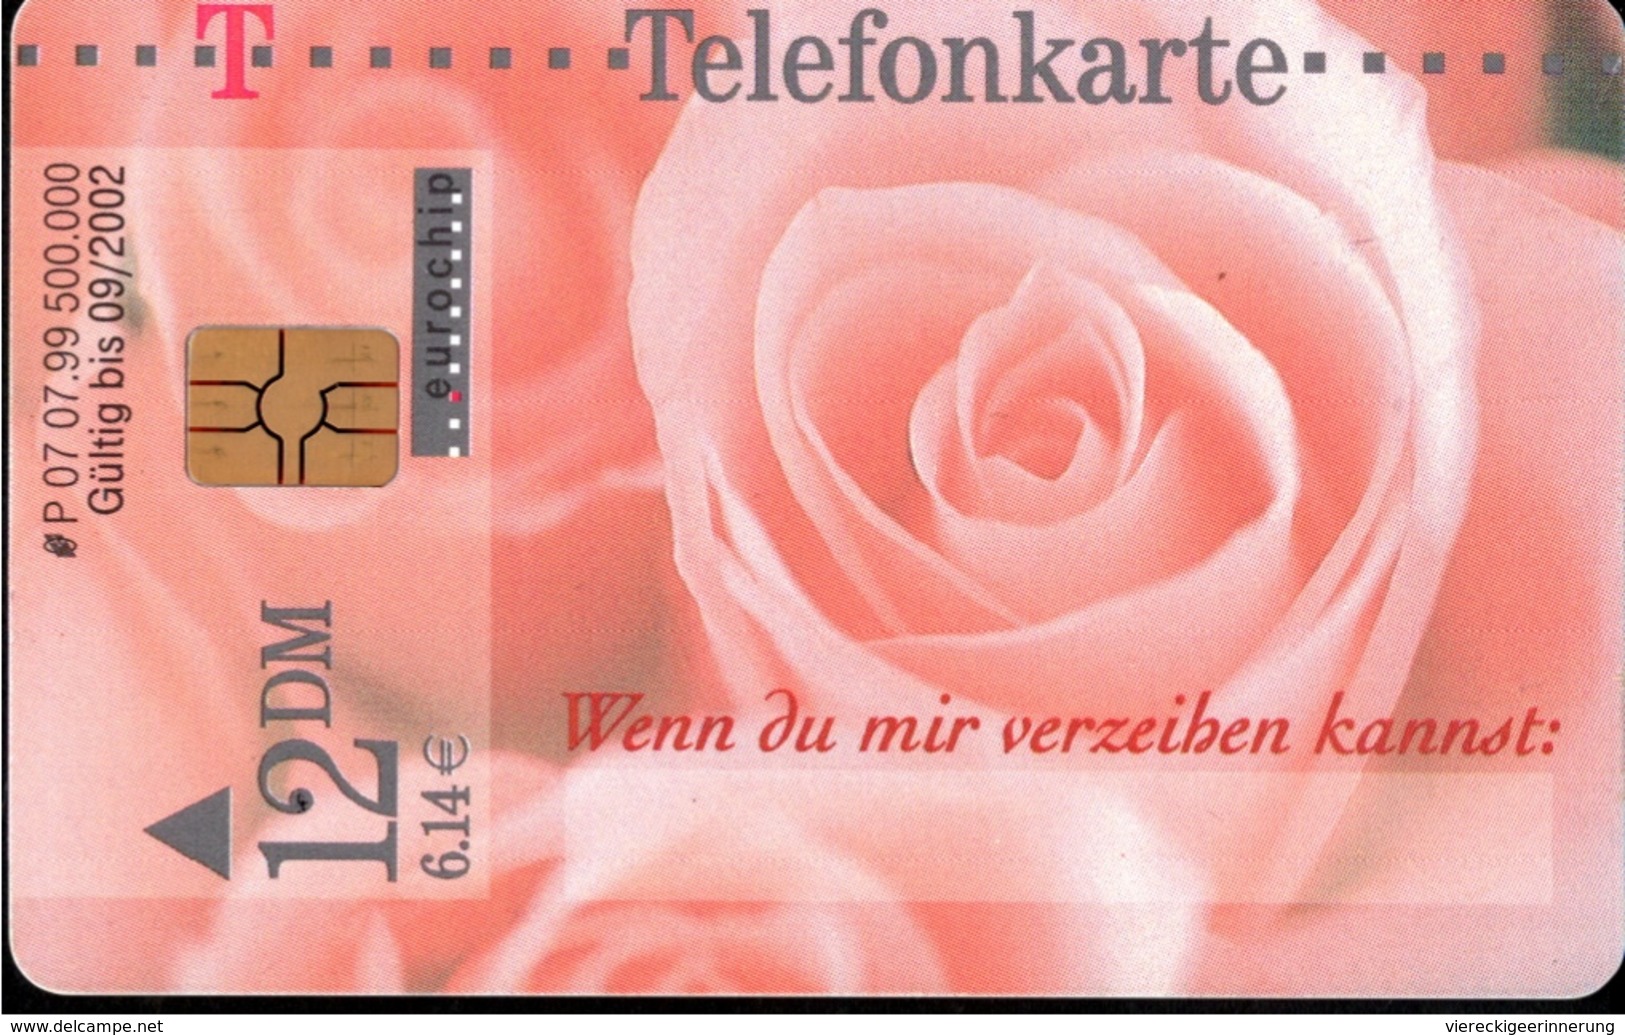 ! Telefonkarte, Telecarte, Phonecard, 1999, P07, Auflage 500000, Telekom Rose, Sorry, Germany - P & PD-Series : D. Telekom Till